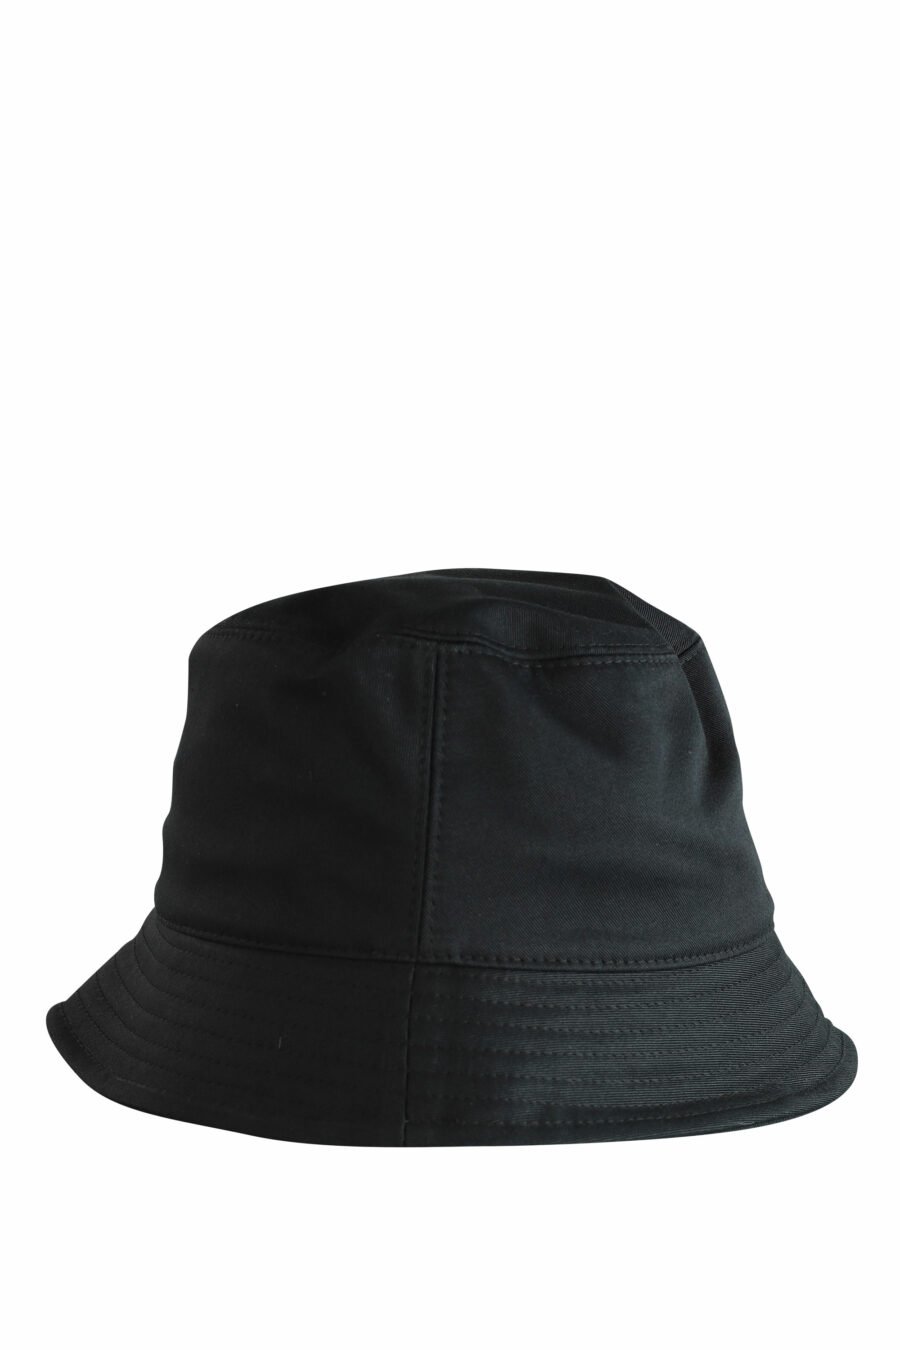 Black fisherman's cap with white double "icon" logo - IMG 1243